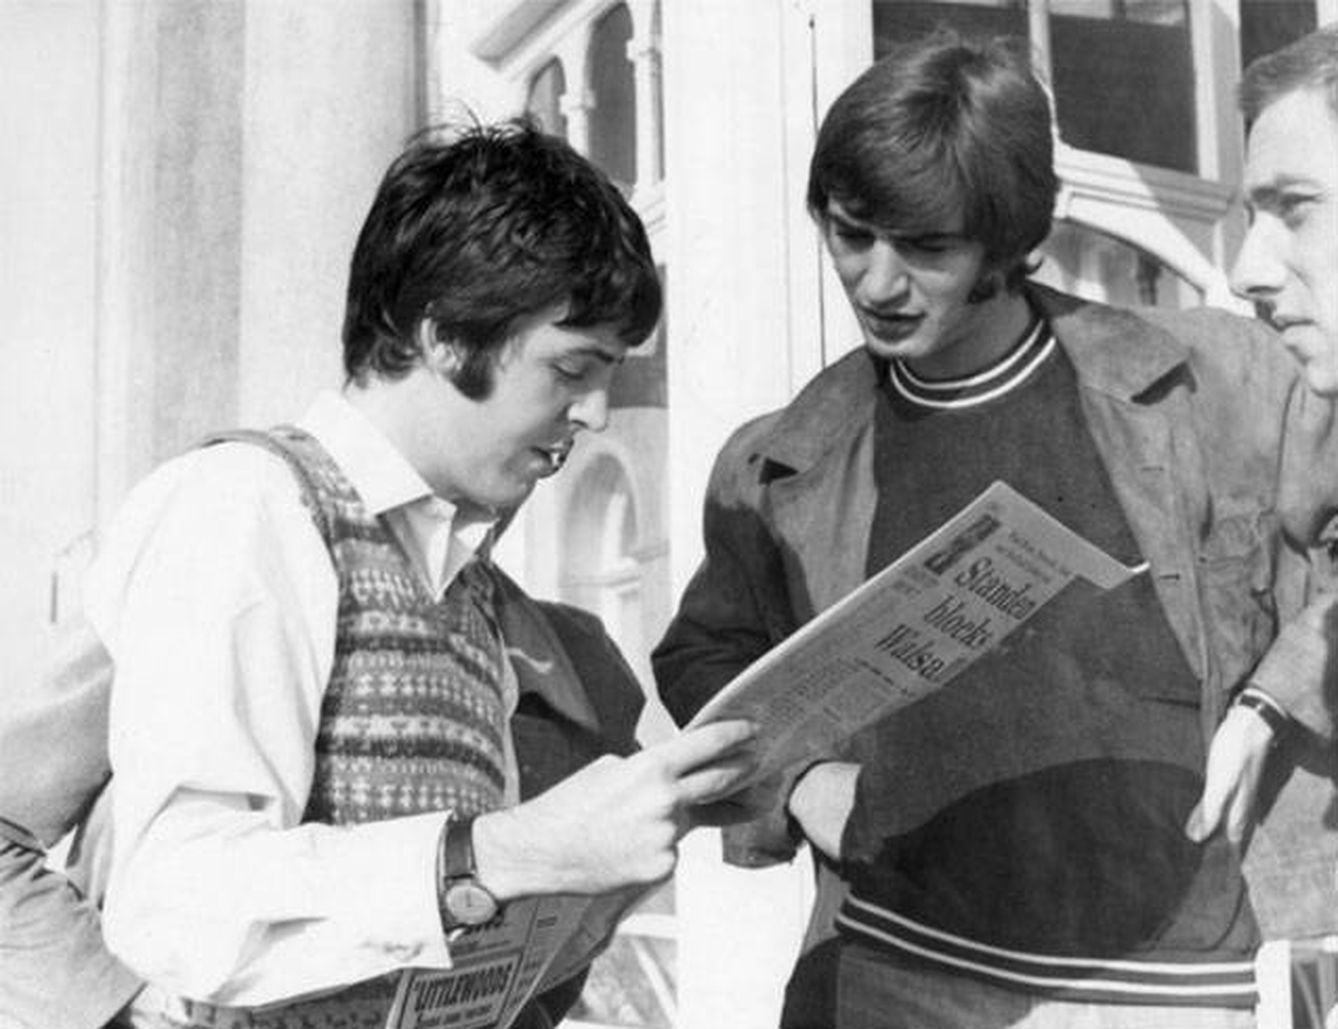 Cavendish con Paul McCartney (Galería de Leslie Cavendish)